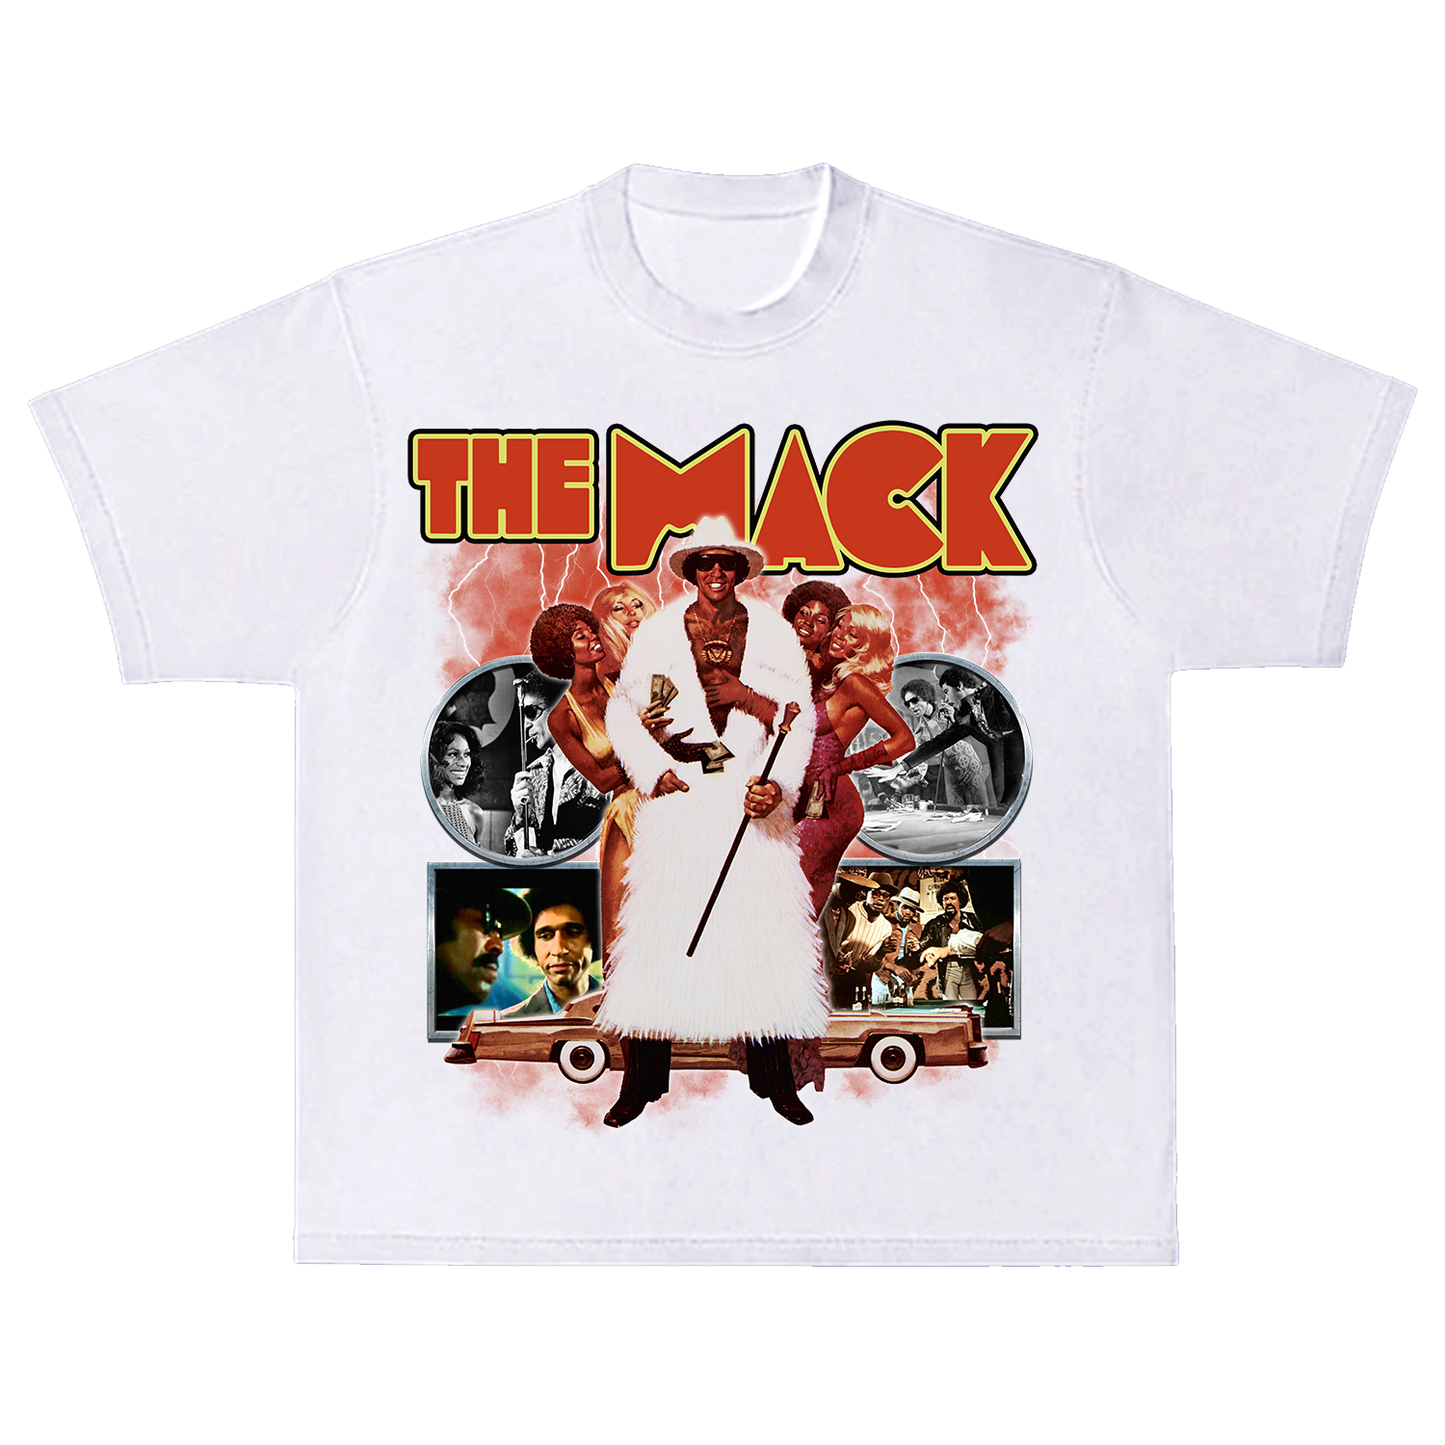 "The Mack"